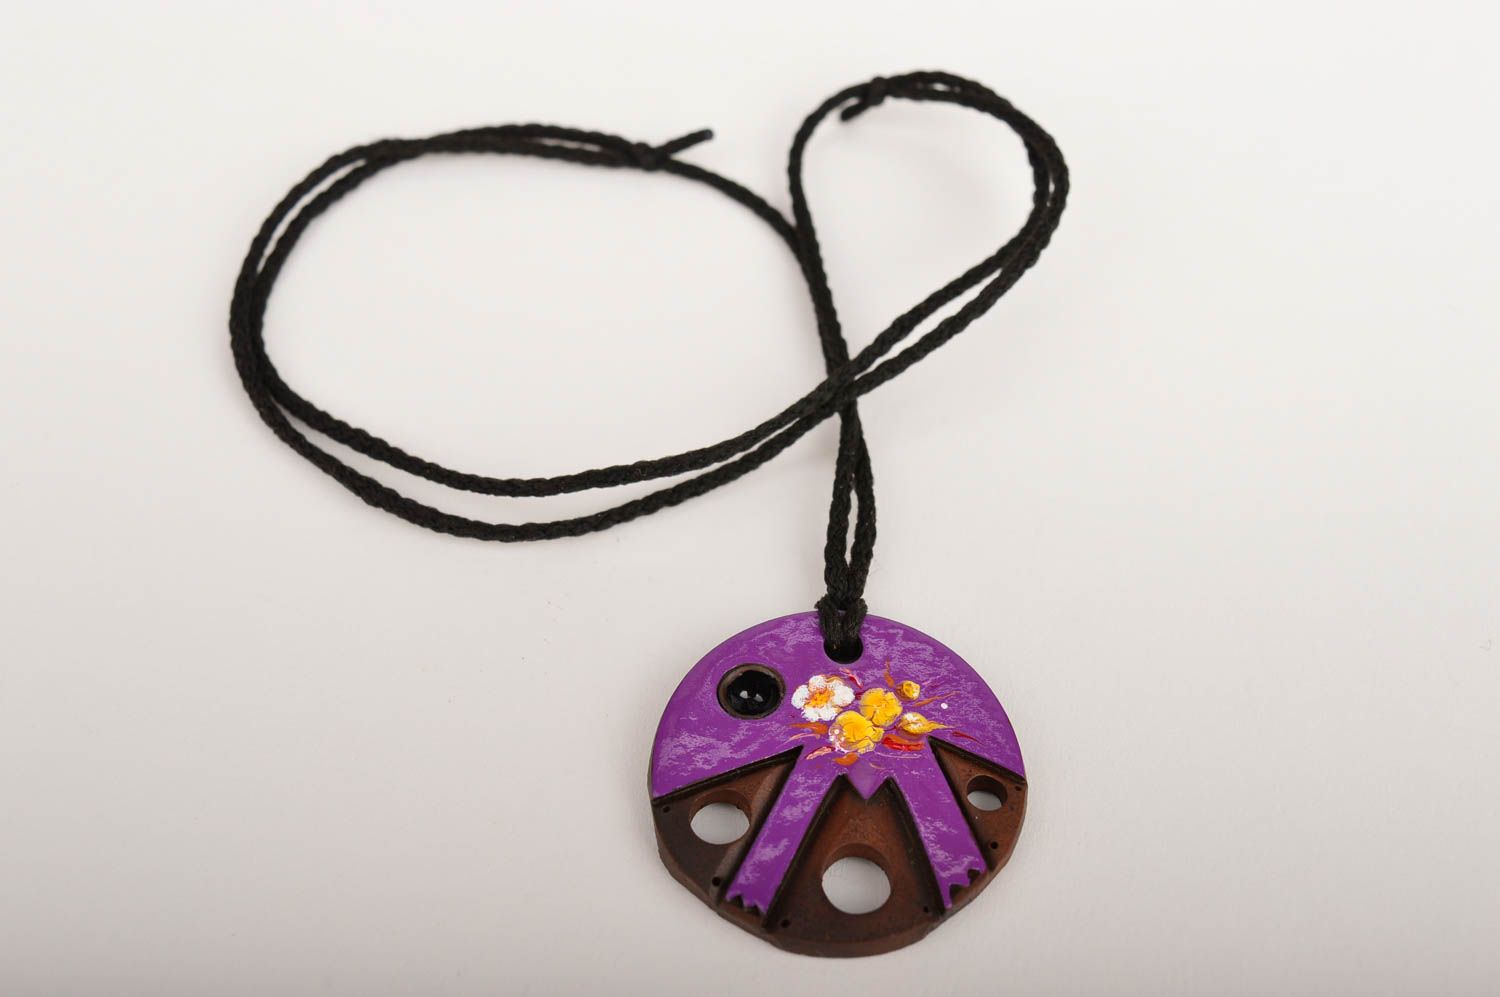 Handmade pendant unusual pendant clay jewelry designer accessory gift ideas photo 2